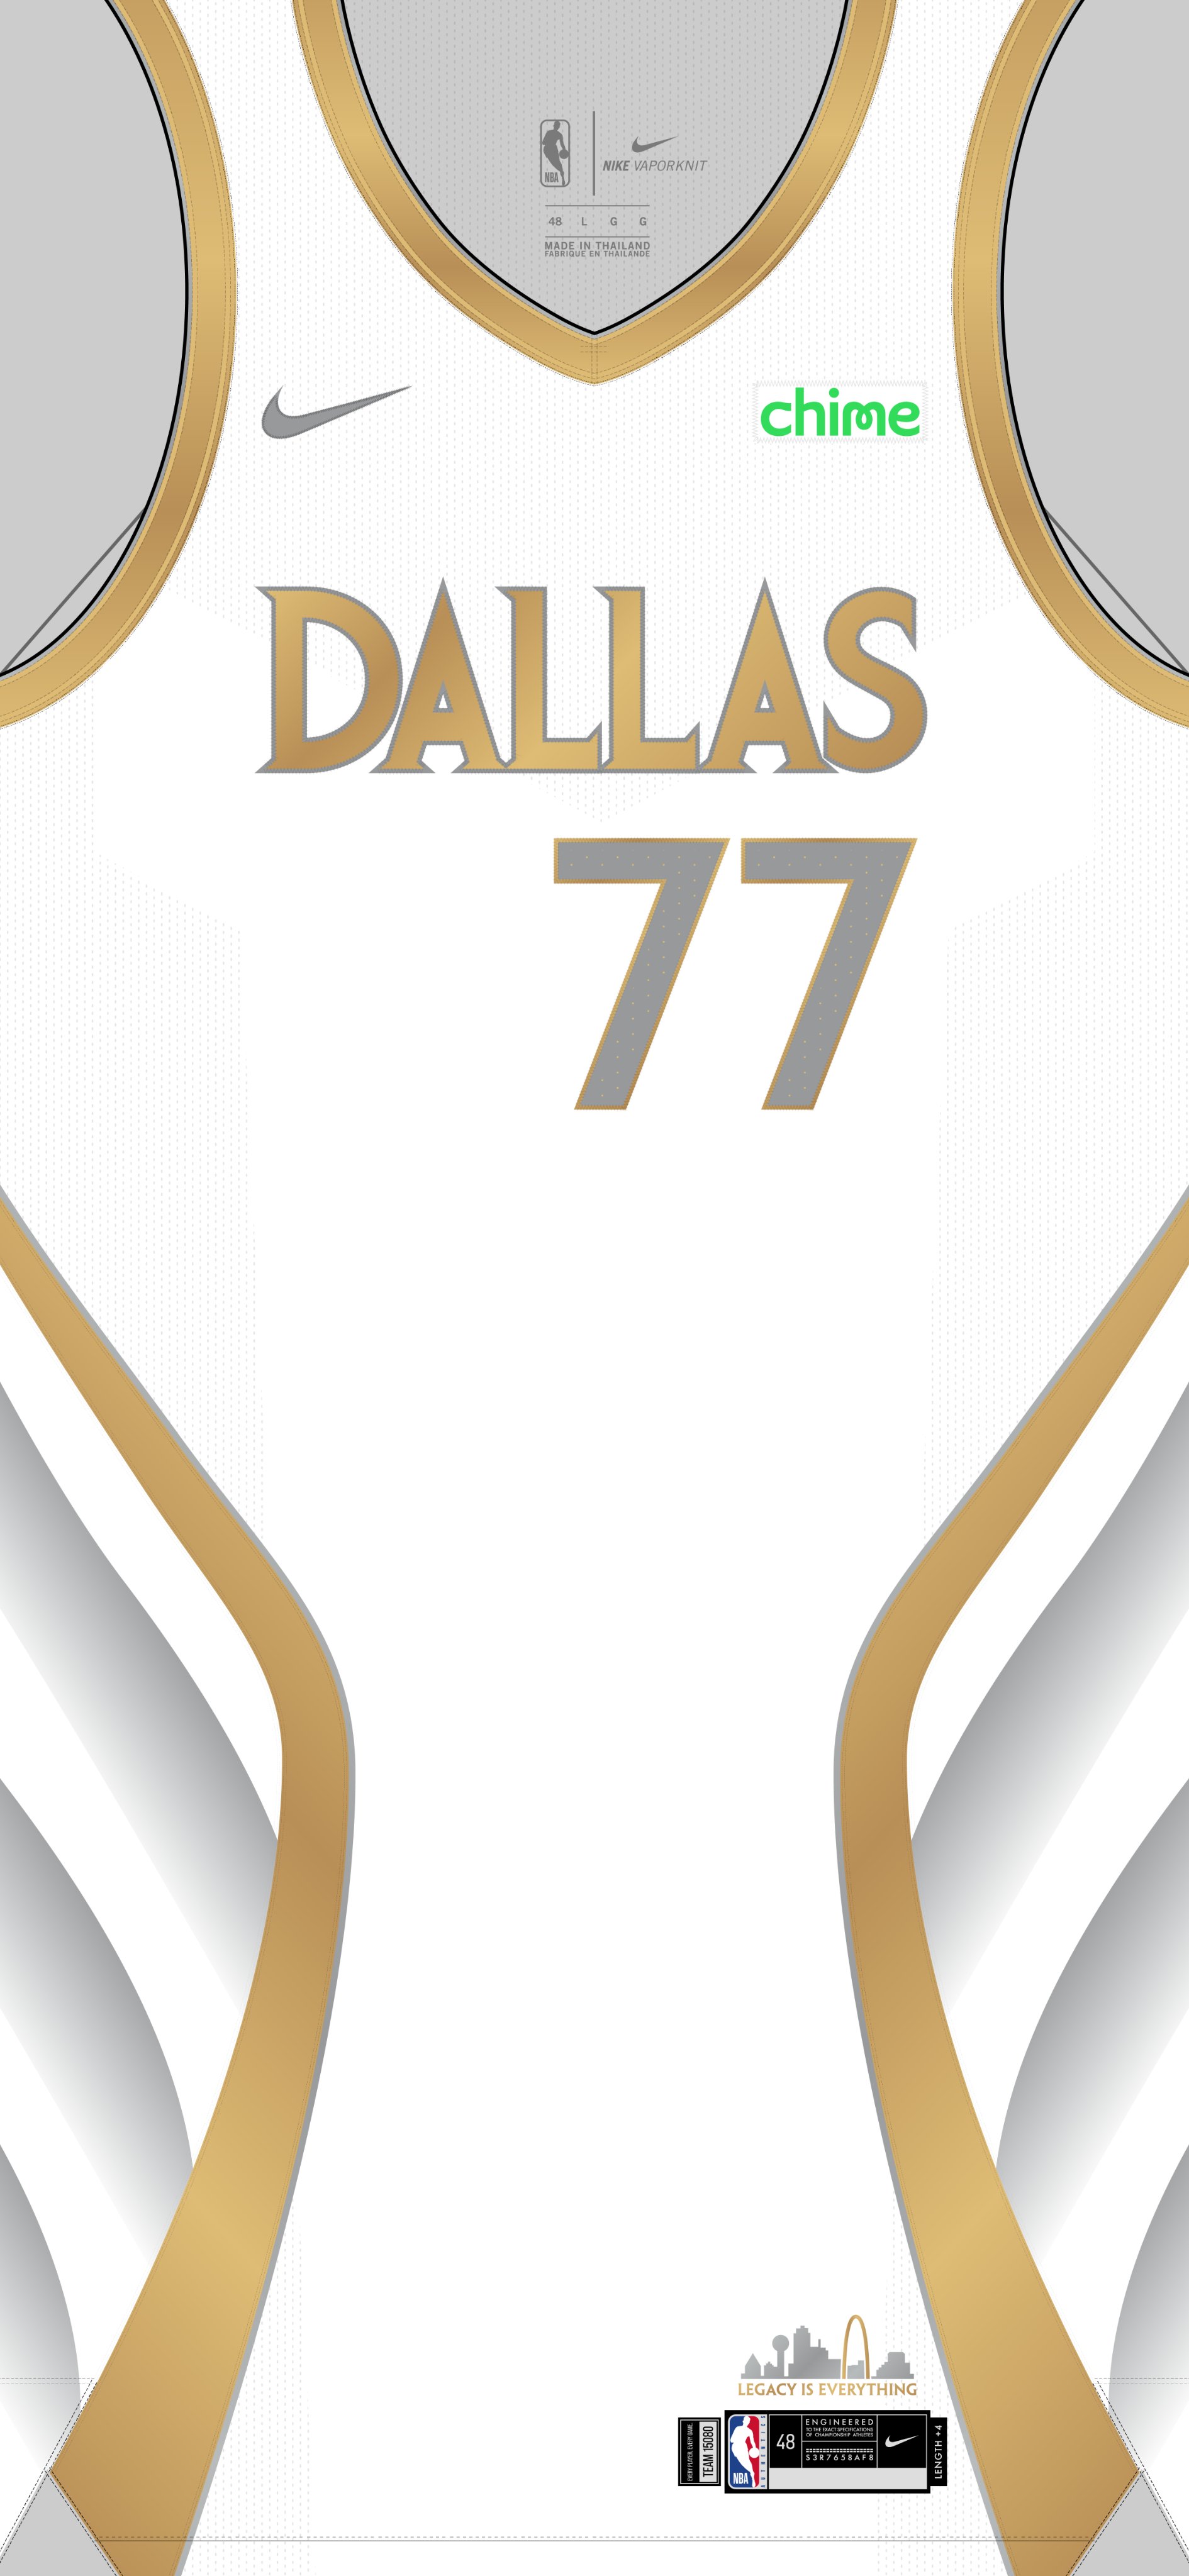 Luka Doncic Jersey Size Medium Dallas Mavericks #77 All Star Gold White